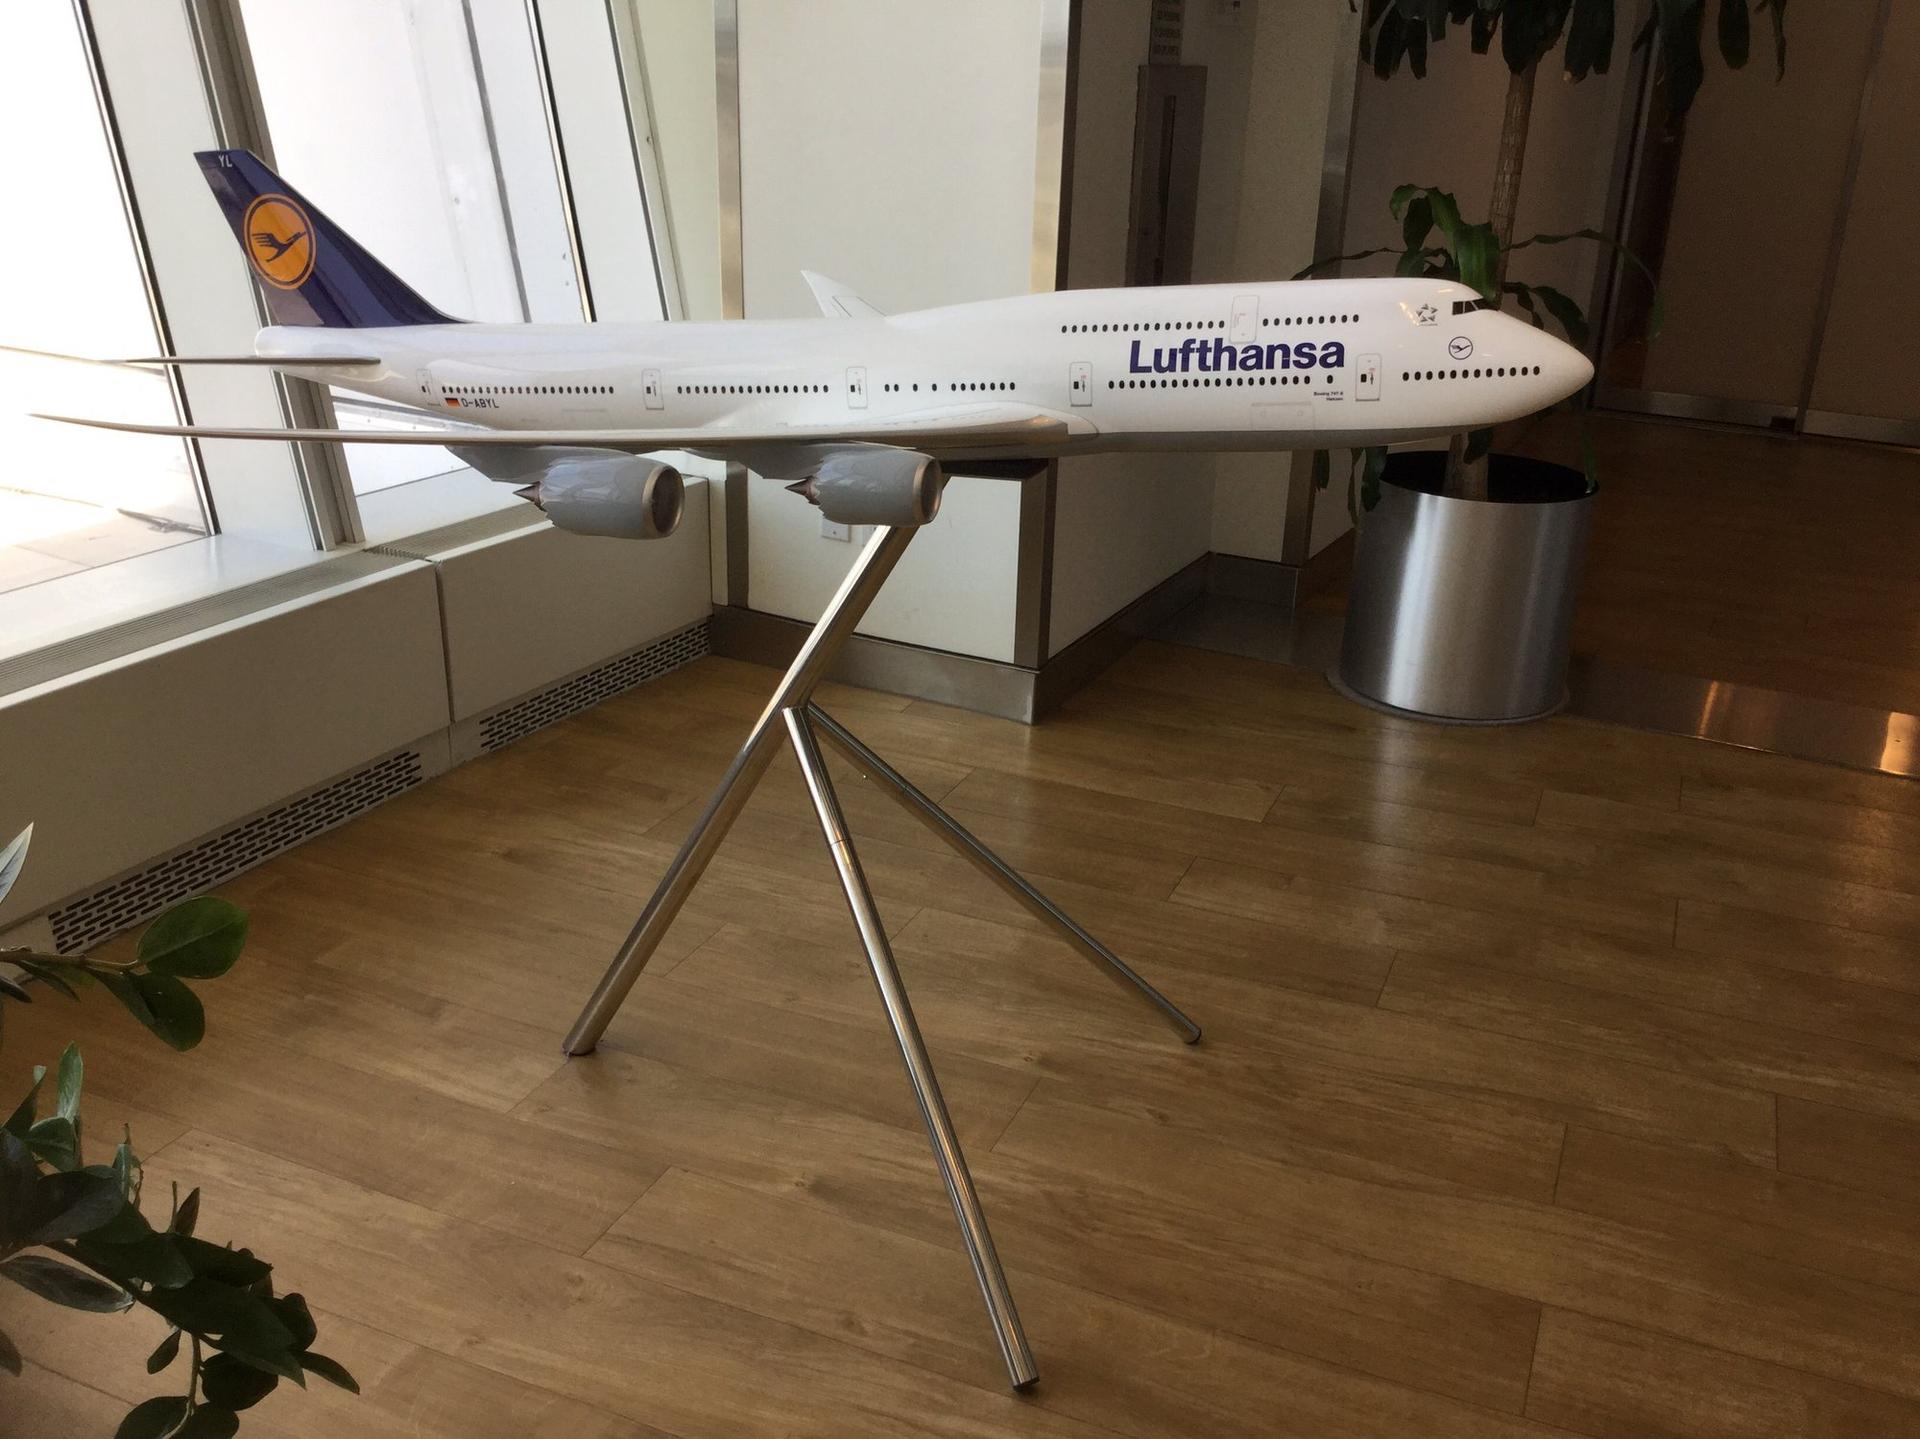 Lufthansa Business Lounge image 19 of 39